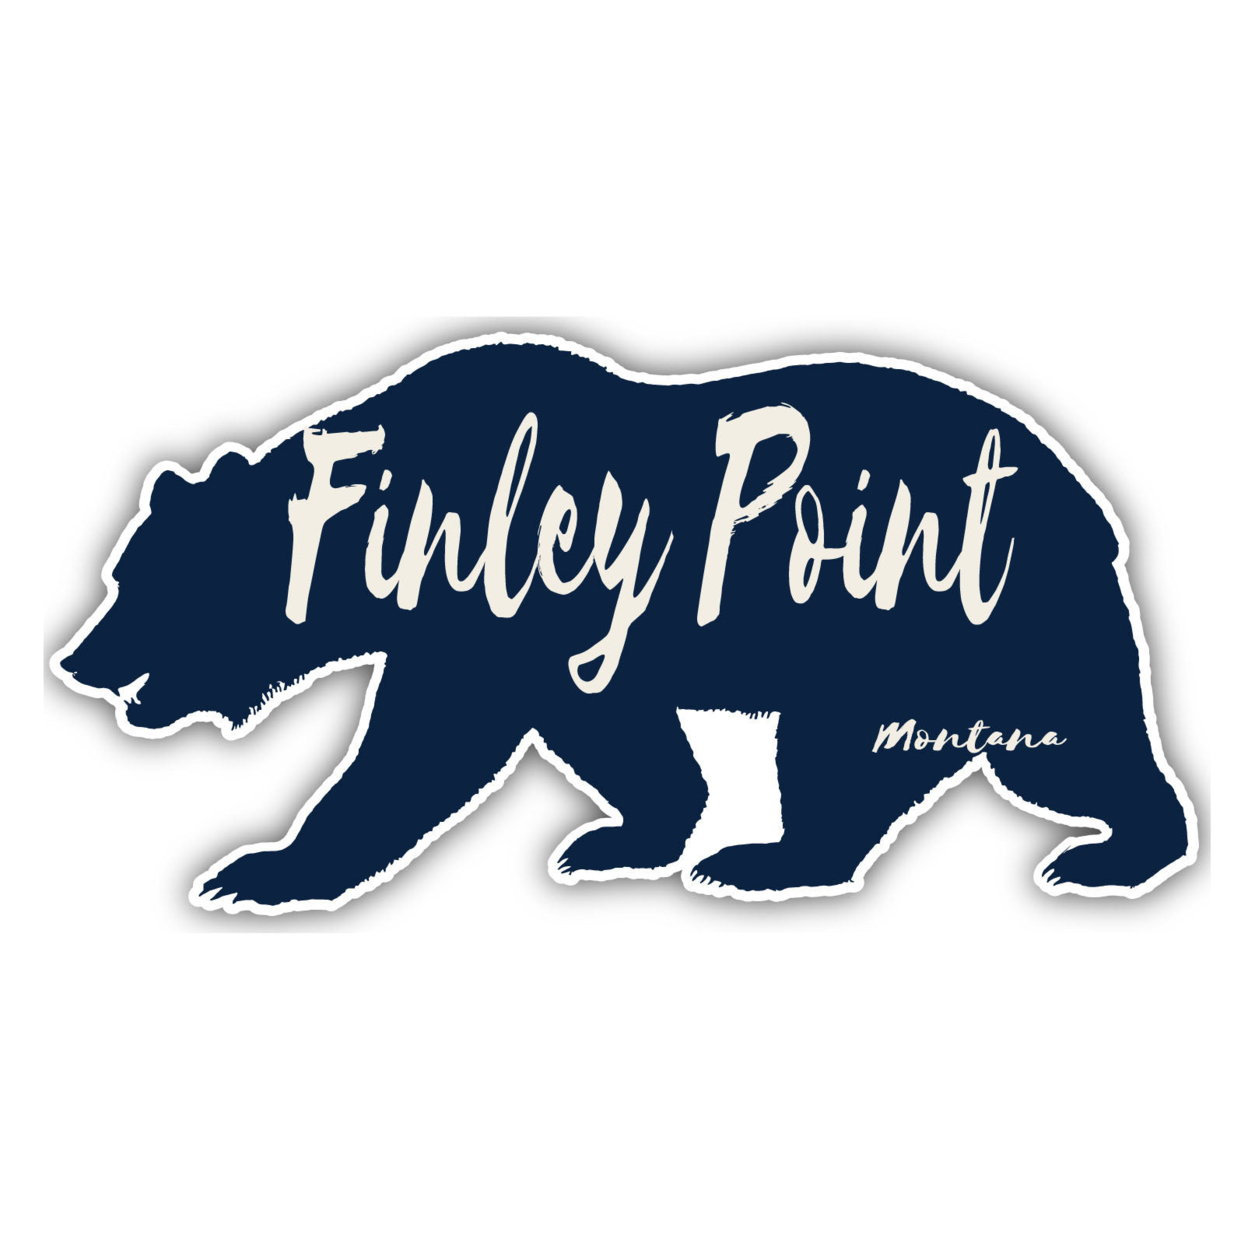 Finley Point Montana Souvenir Decorative Stickers (Choose Theme And Size) - Single Unit, 10-Inch, Bear